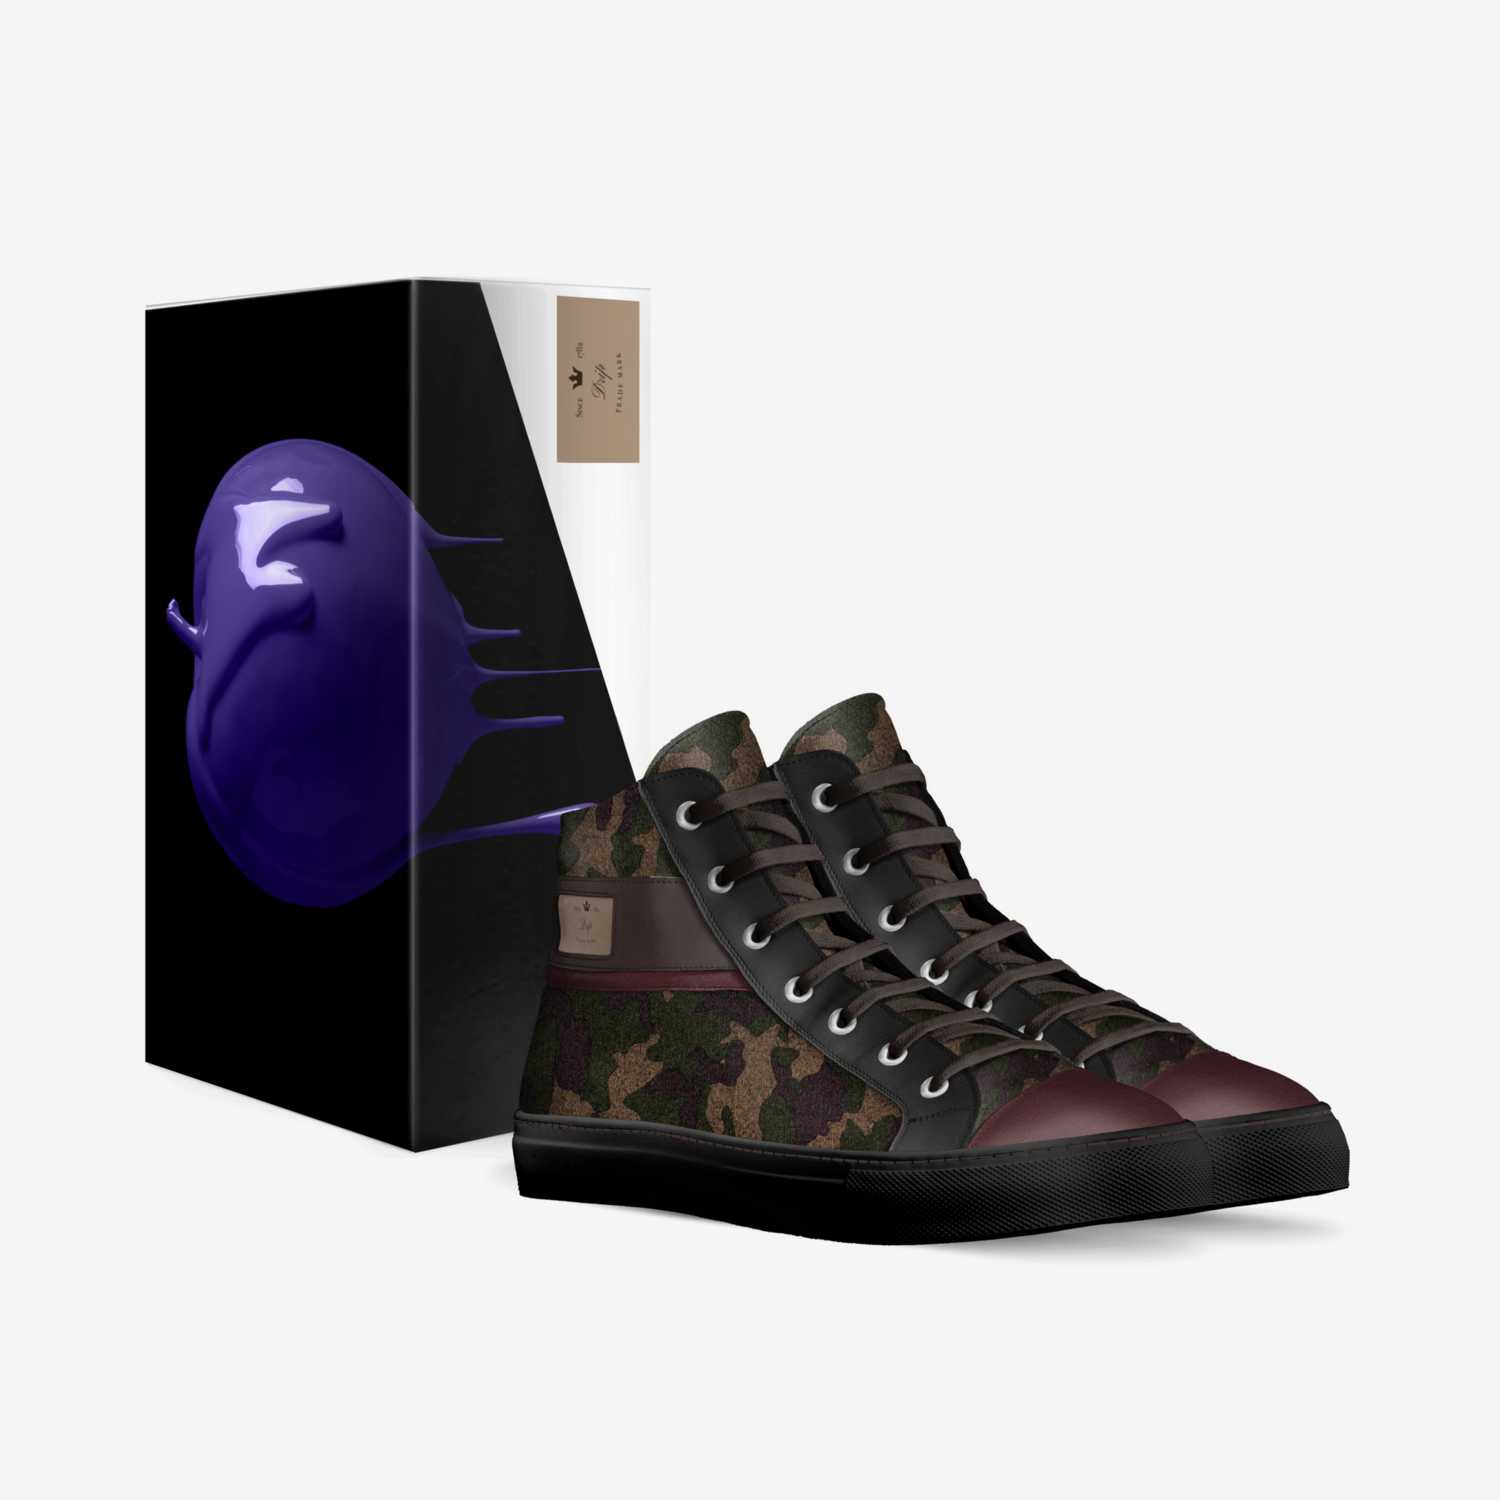 GRAM CLUB custom made in Italy shoes by Jeffery Nixon | Box view